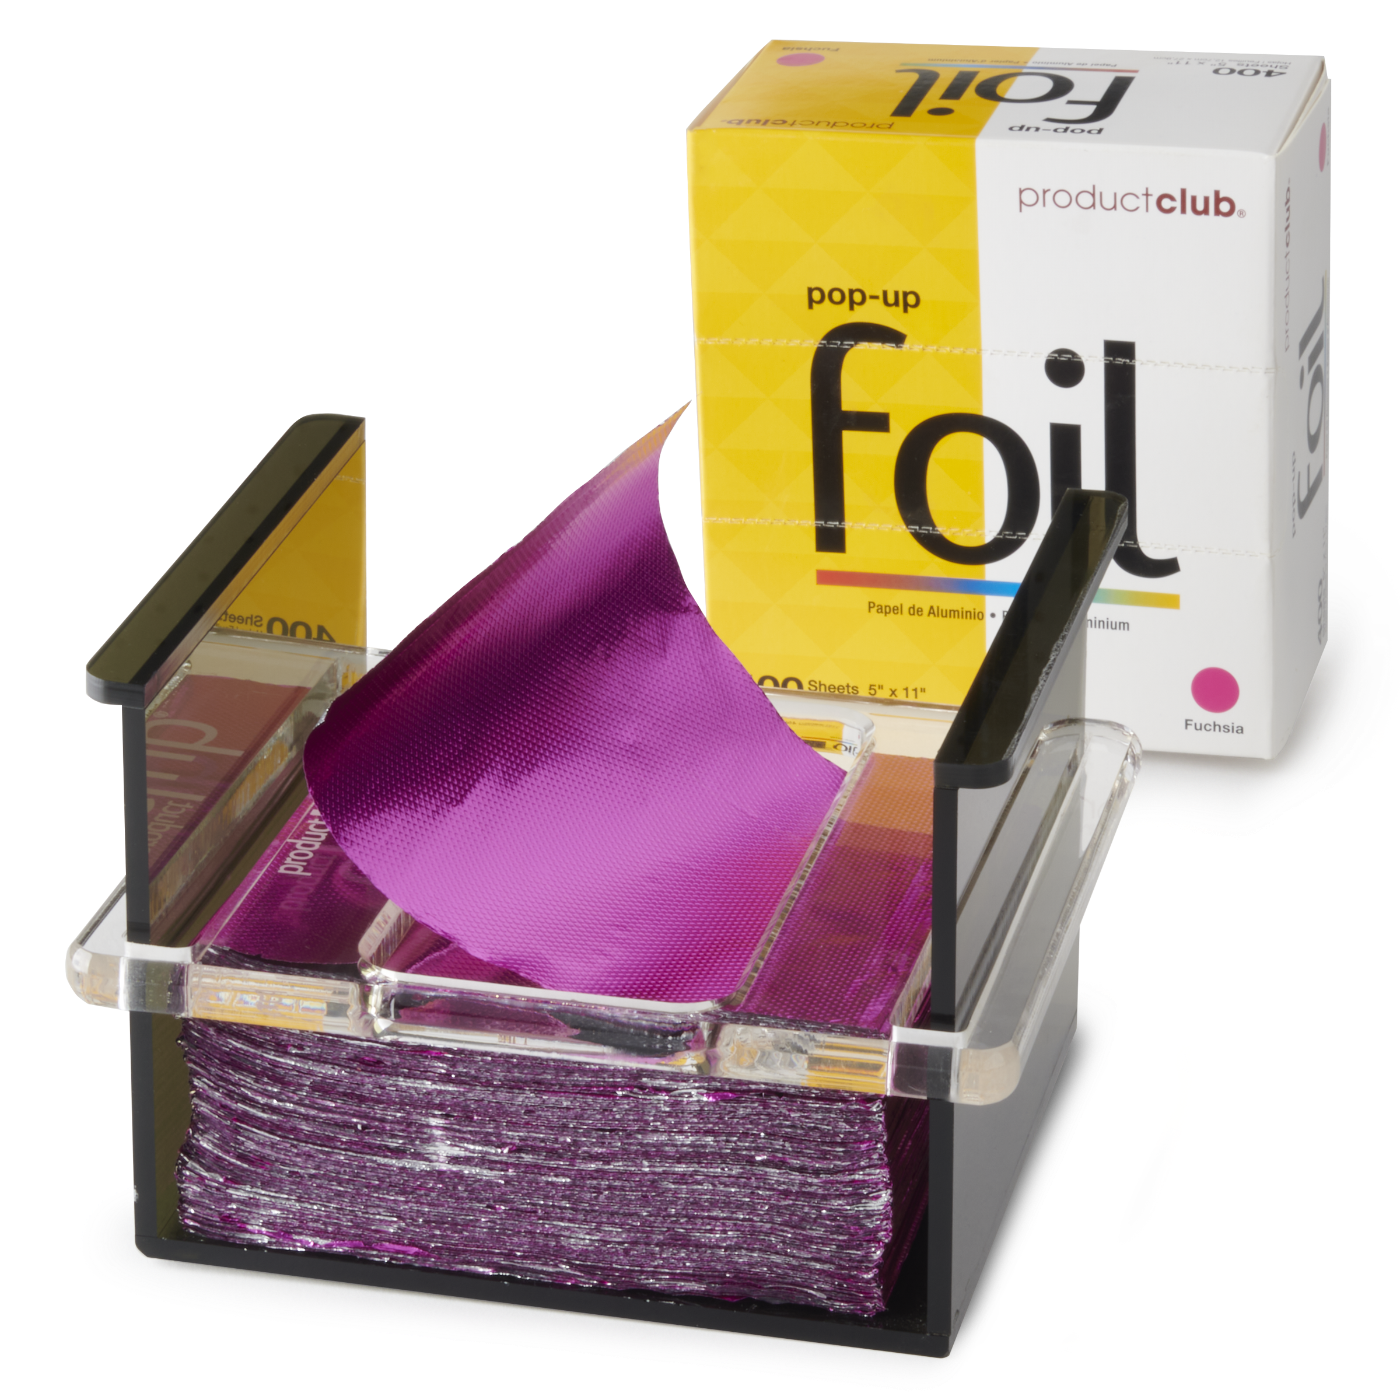 Pop-Up Foil Dispenser with FREE 5"x11" Fuchsia Pop-Up Foil